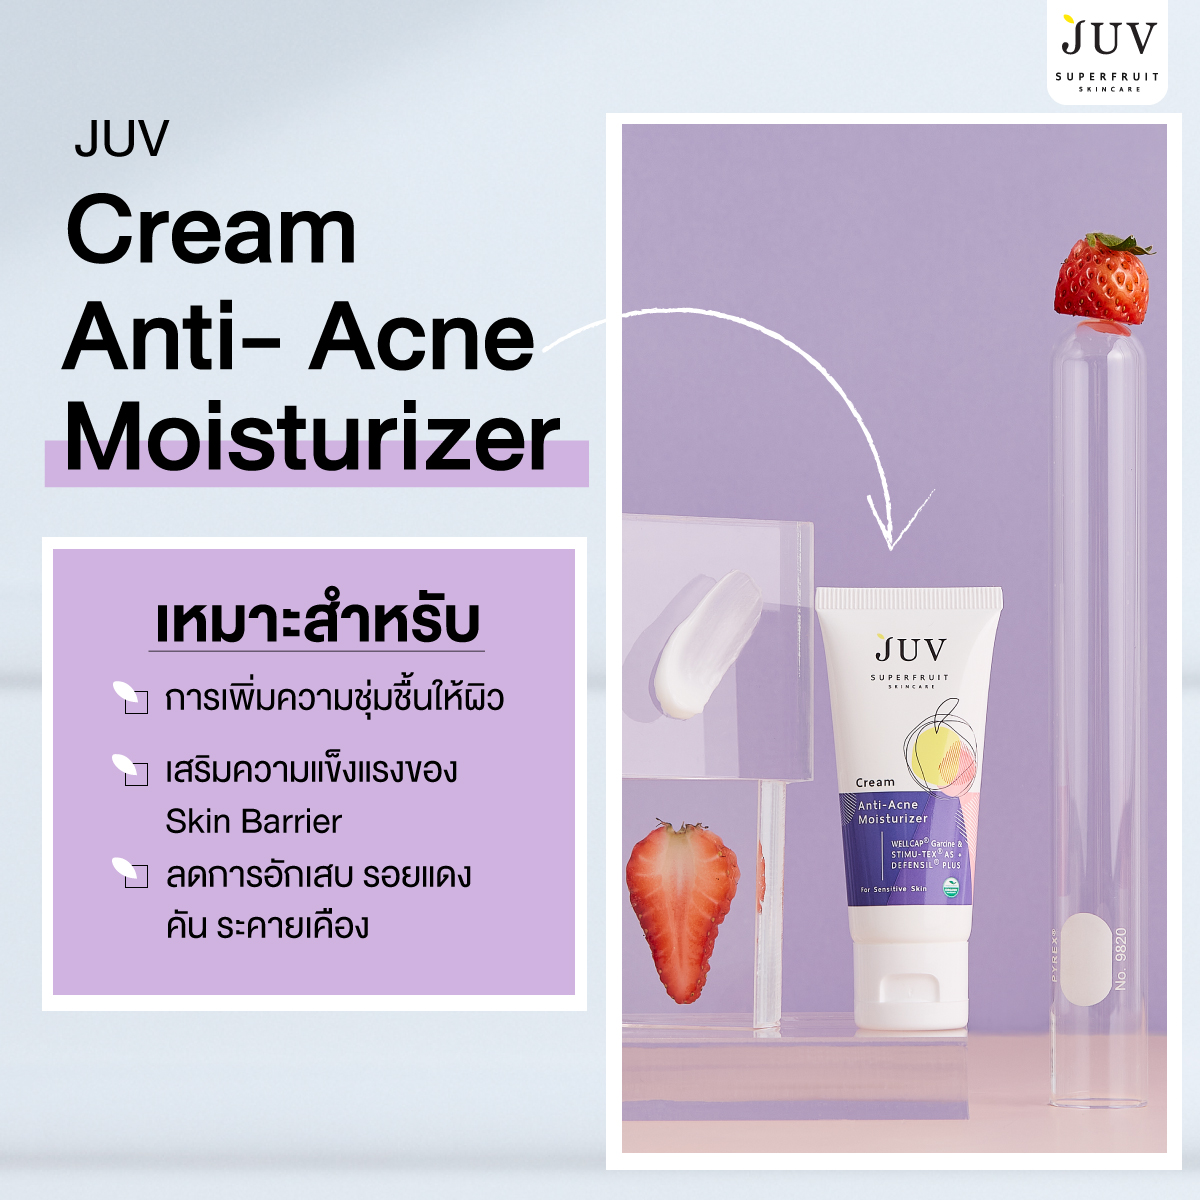 JUV Cream Anti-Acne Moisturizer  มอยเจอร์ครีมสยบปัญหาสิว บำรุงผิวชุ่มชื้น